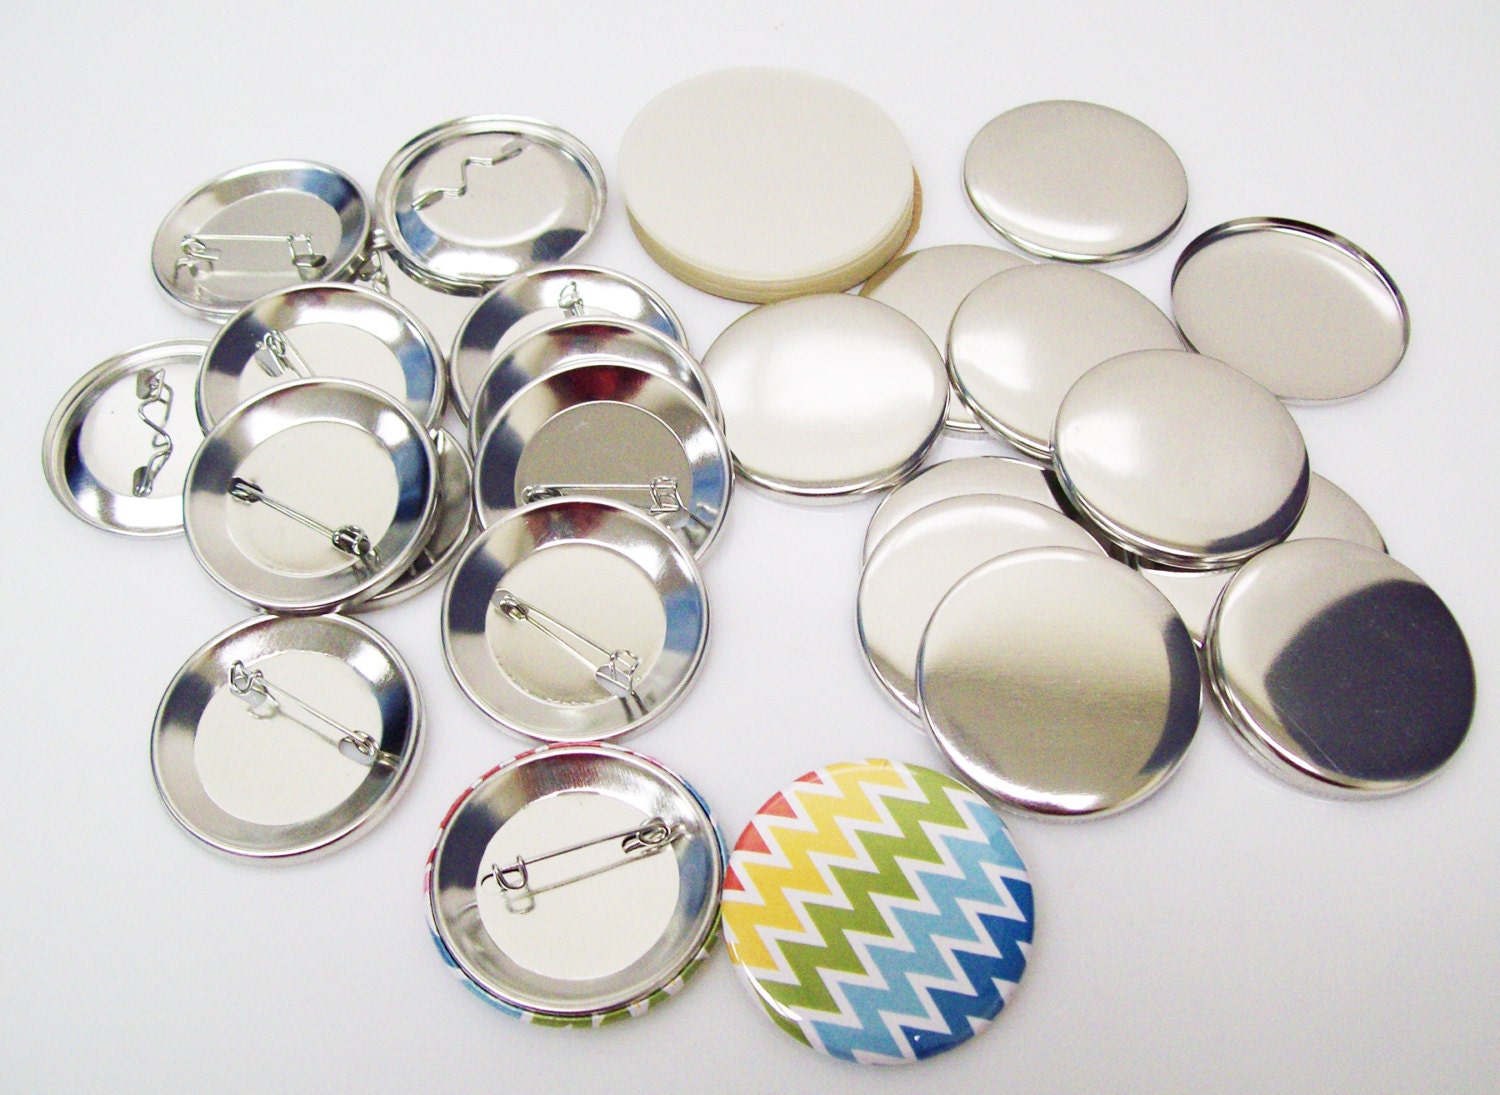 1.5 Inch Metal Flat Back Buttons Complete Sets for Tecre Button Press You  Choose Quantity 25-500 1 1/2 Button Maker Machine Supplies 